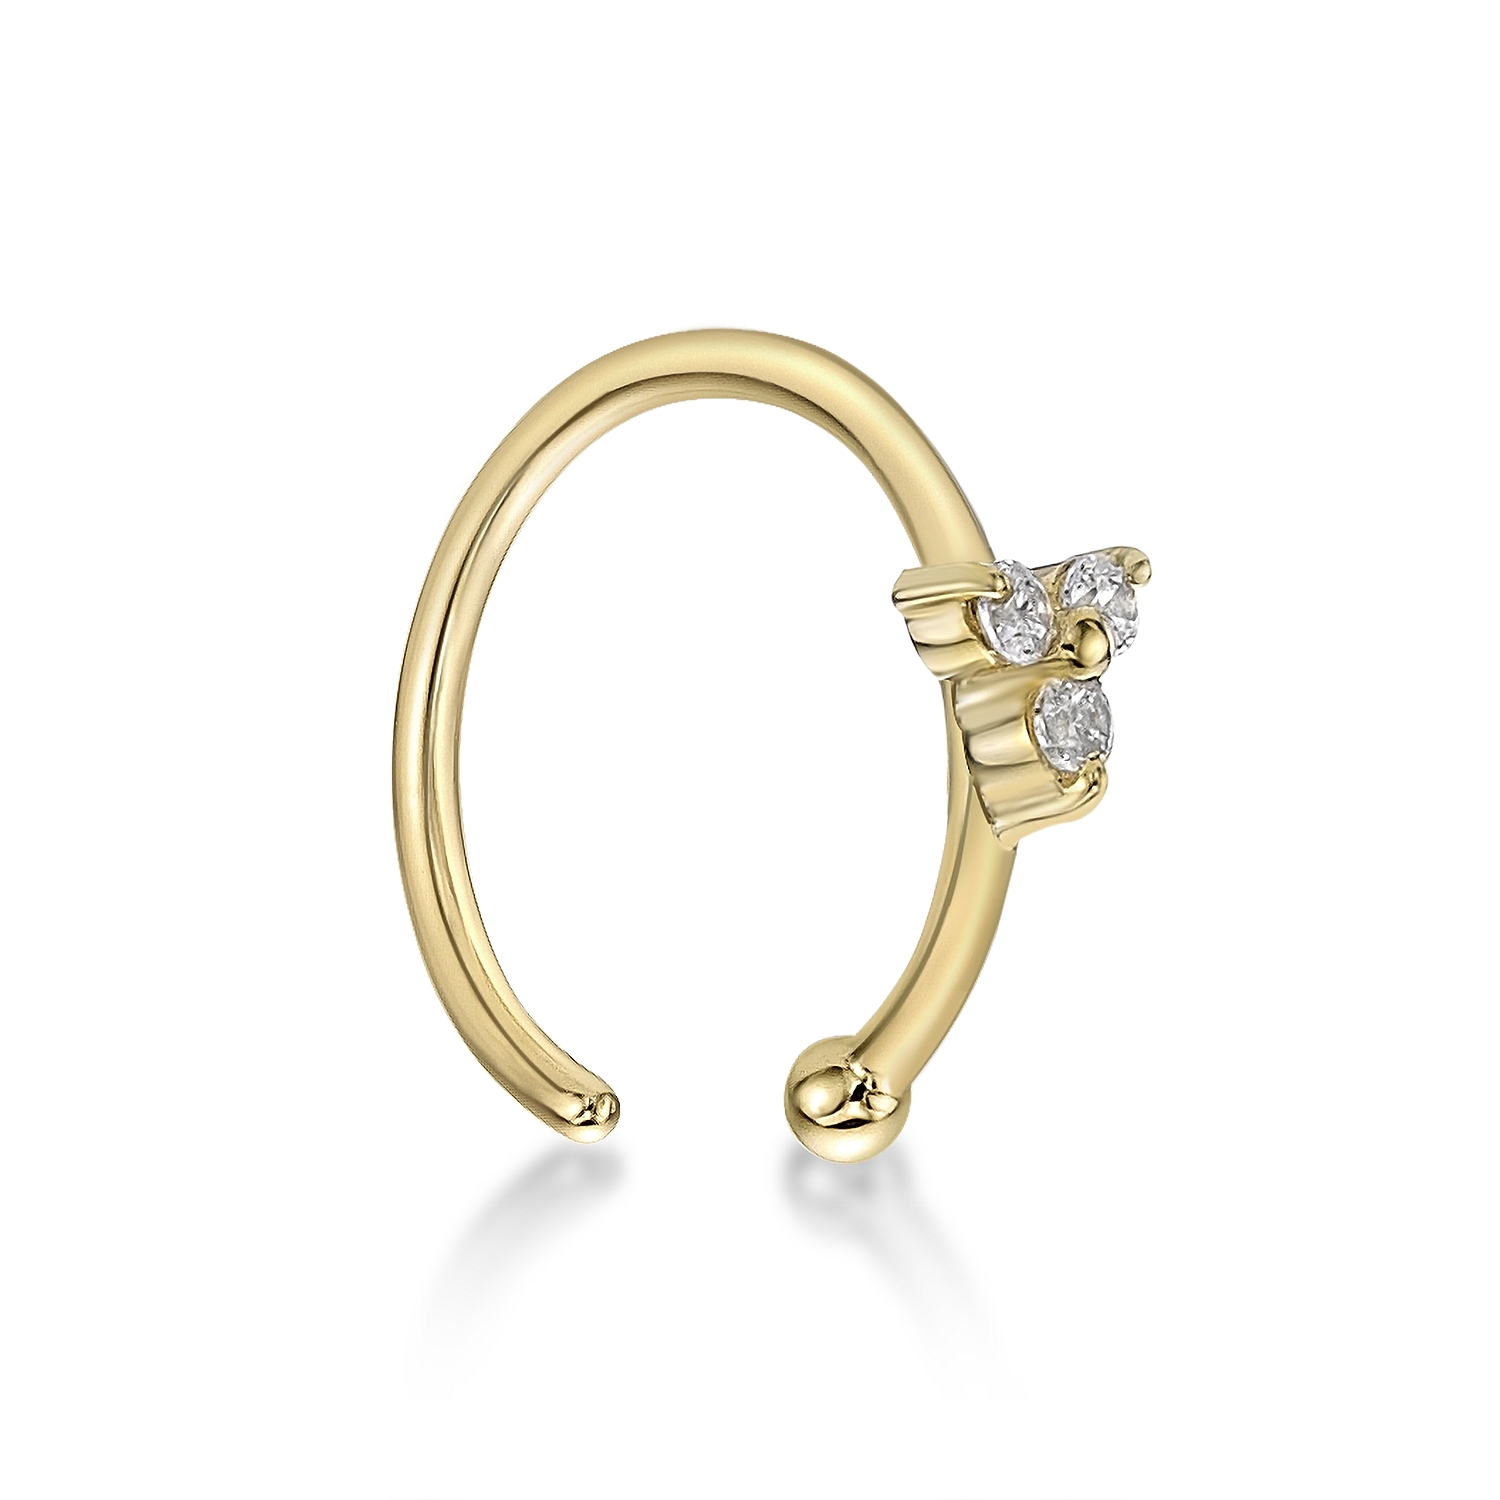 Lavari Jewelers Women's 10 MM 3 Stone Hoop Nose Ring with Cubic Zirconia, 14K Yellow Gold, 1 MM Cubic Zirconia, 20 Gauge